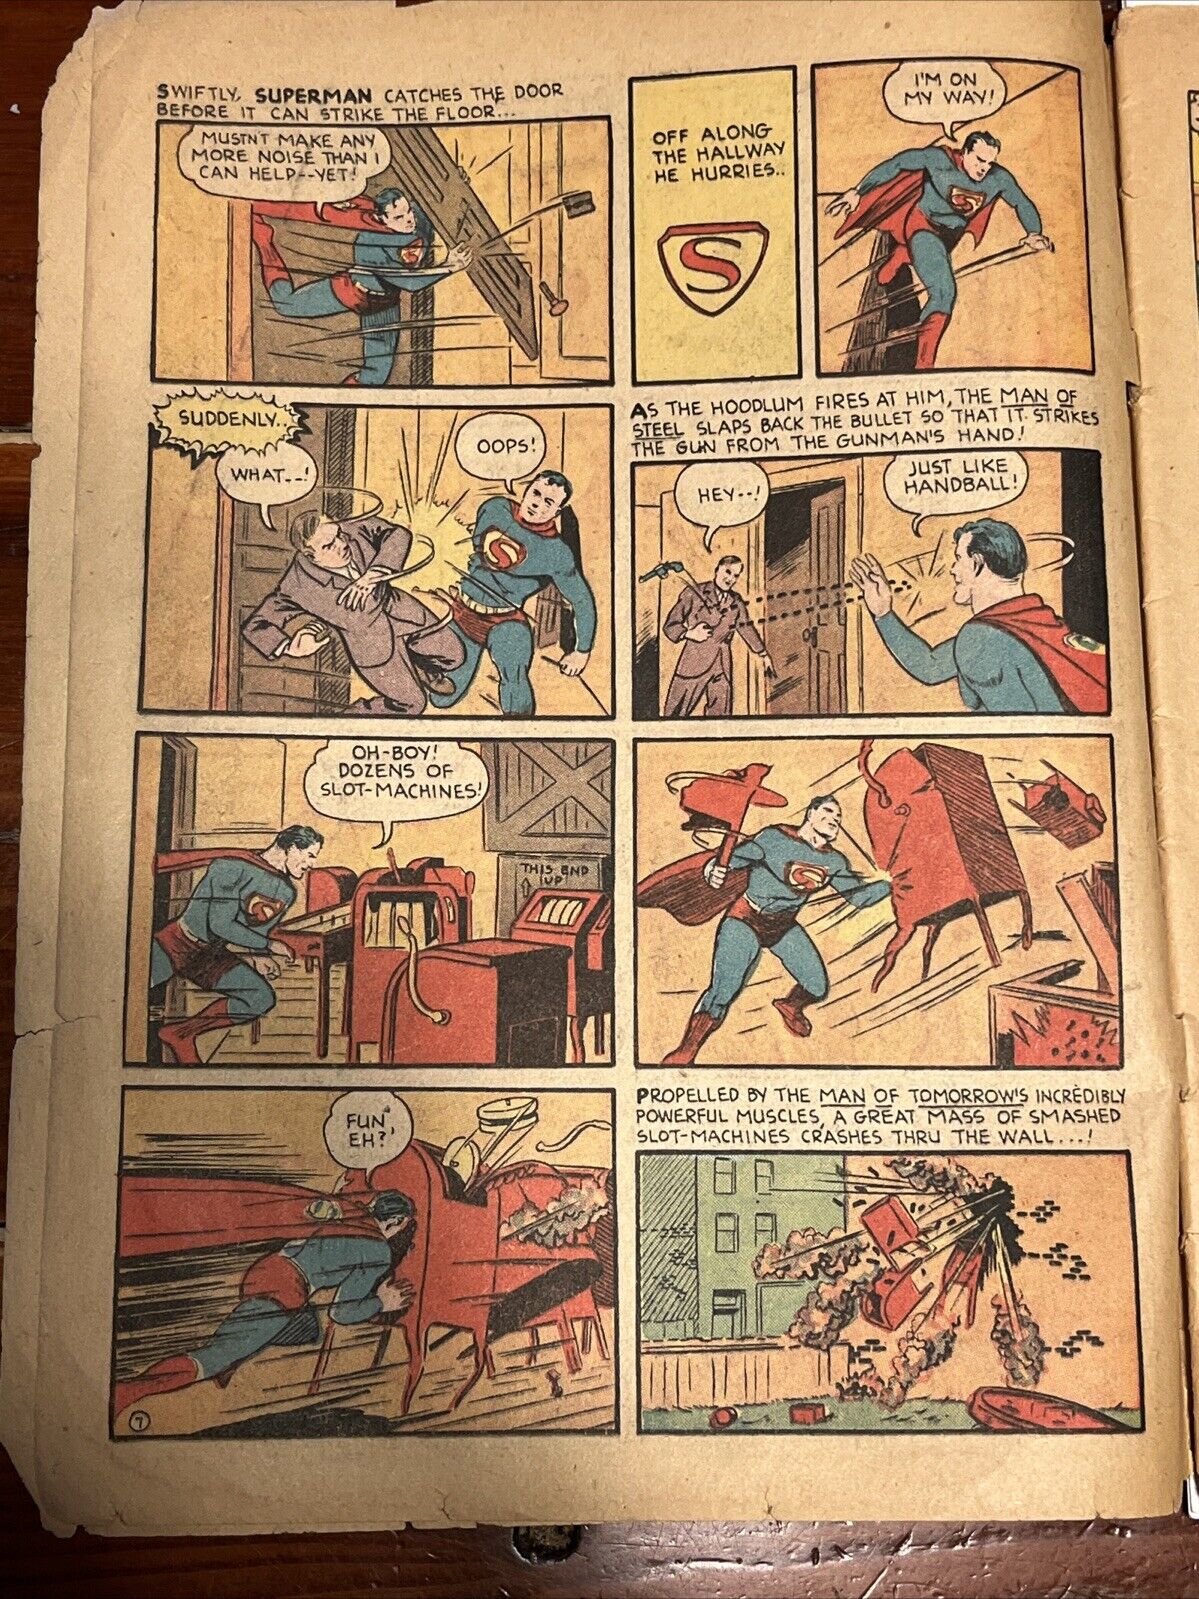 SUPERMAN #5 Incomplete ADS FOR BATMAN #1